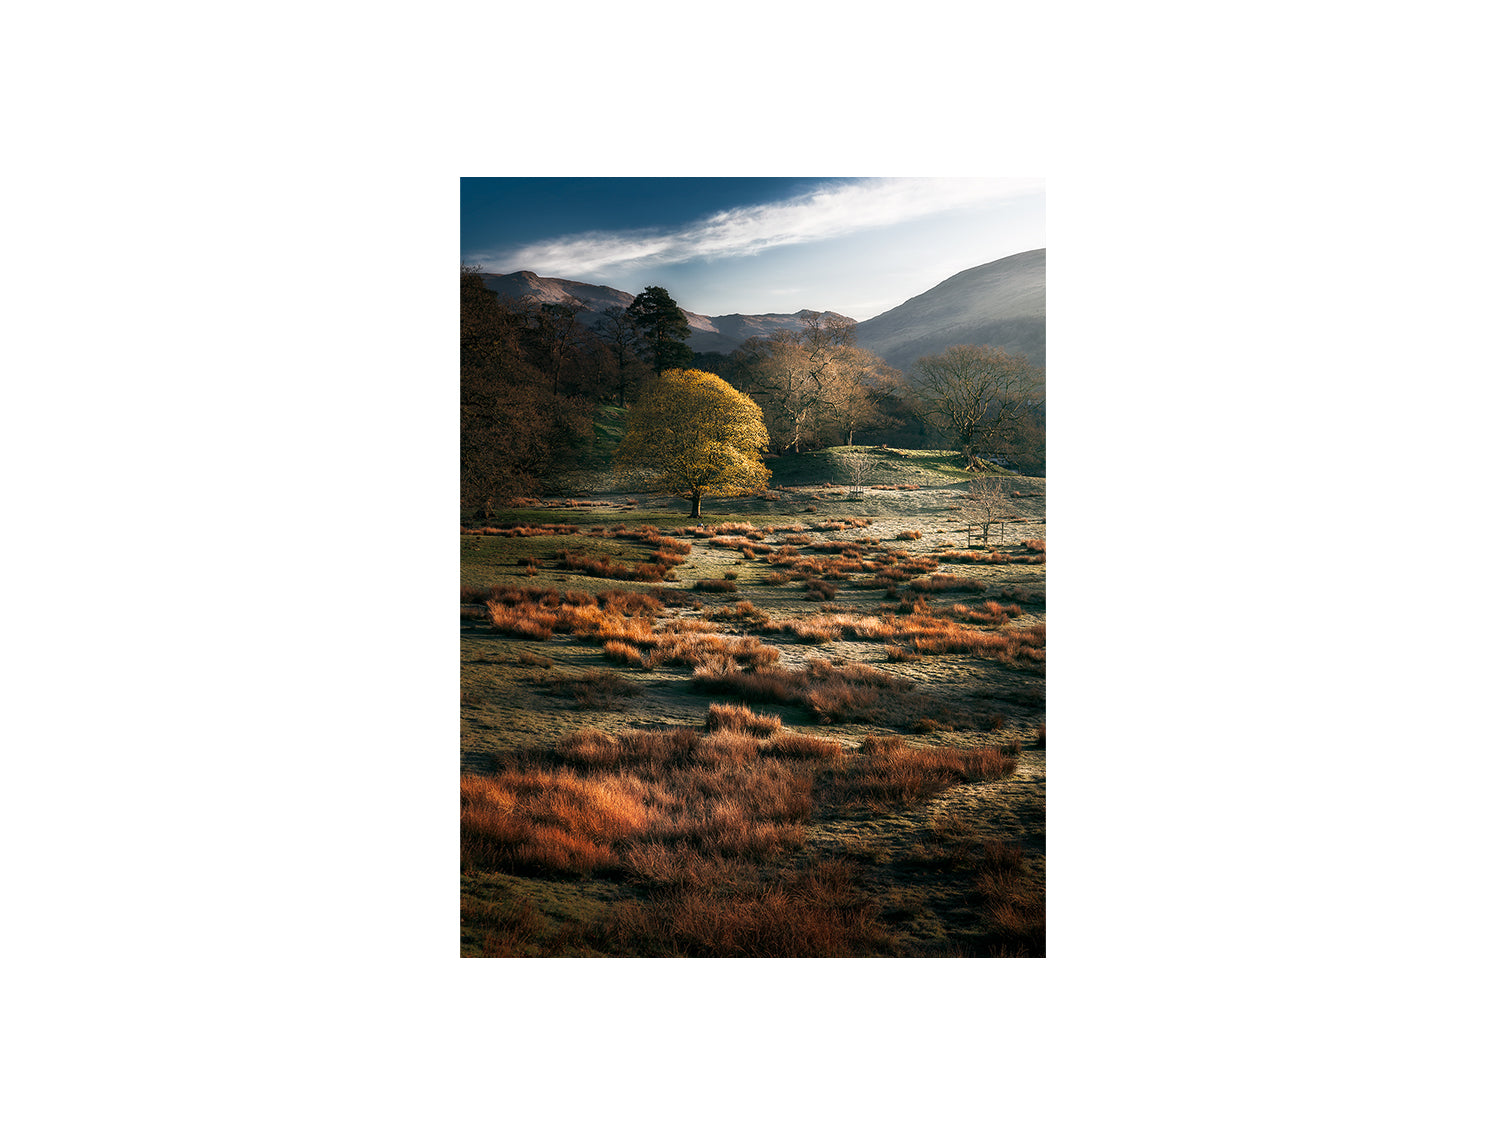 Lake District National Park - England